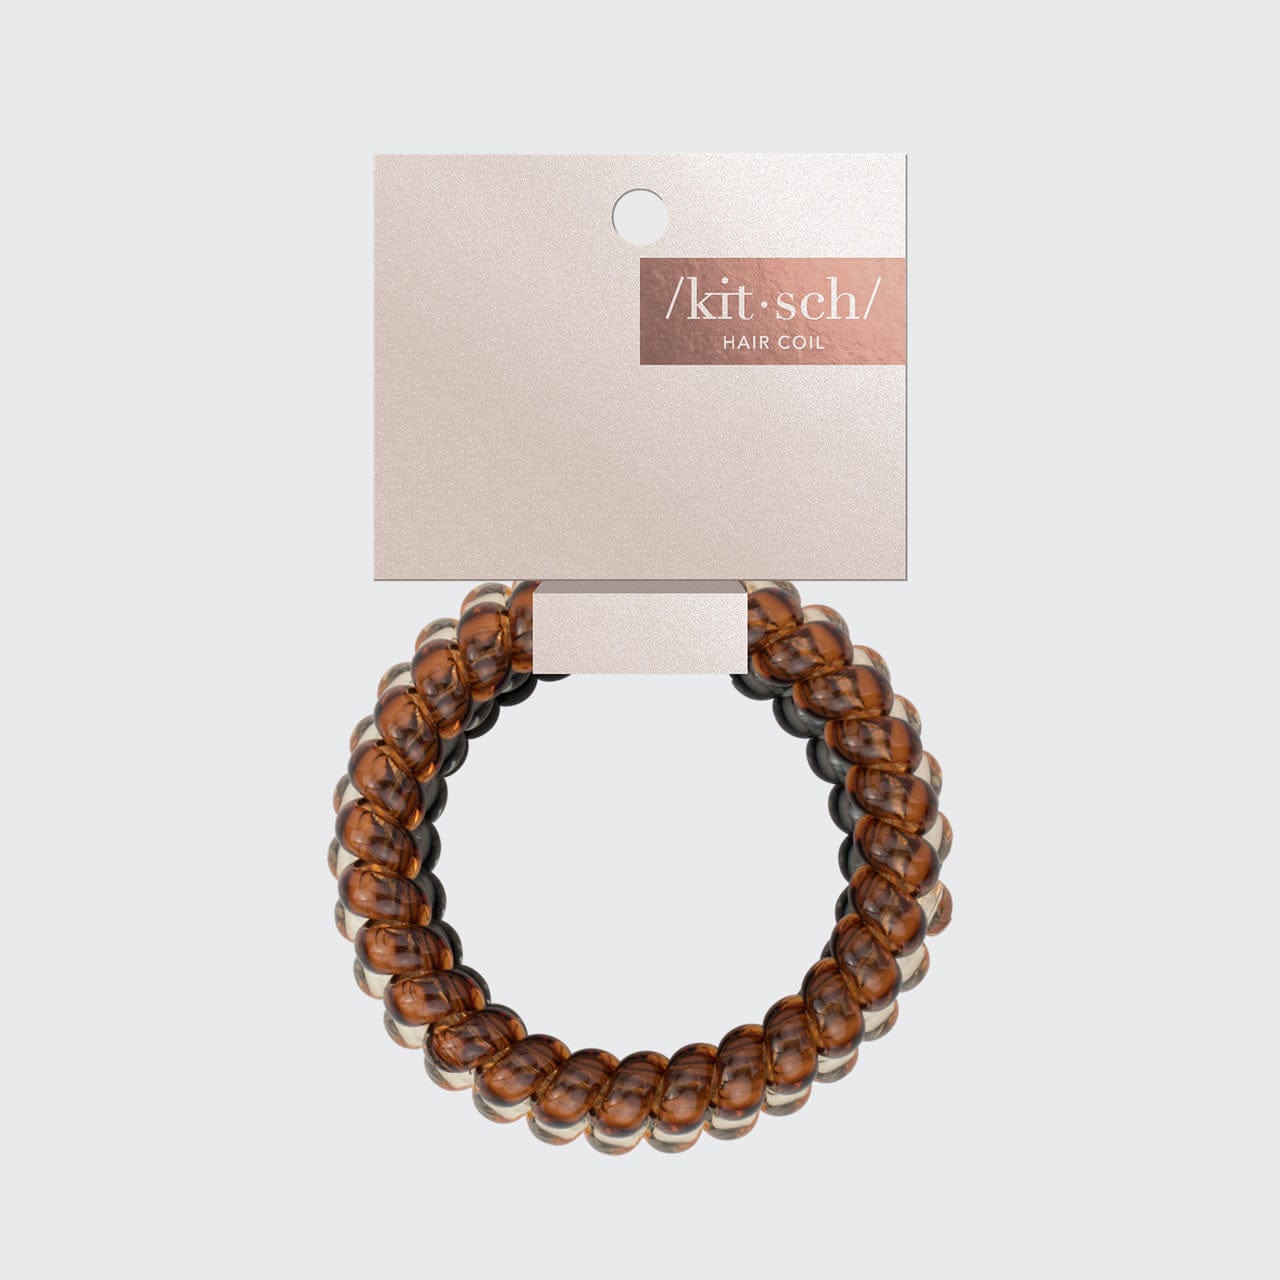 a bracelet with a tag